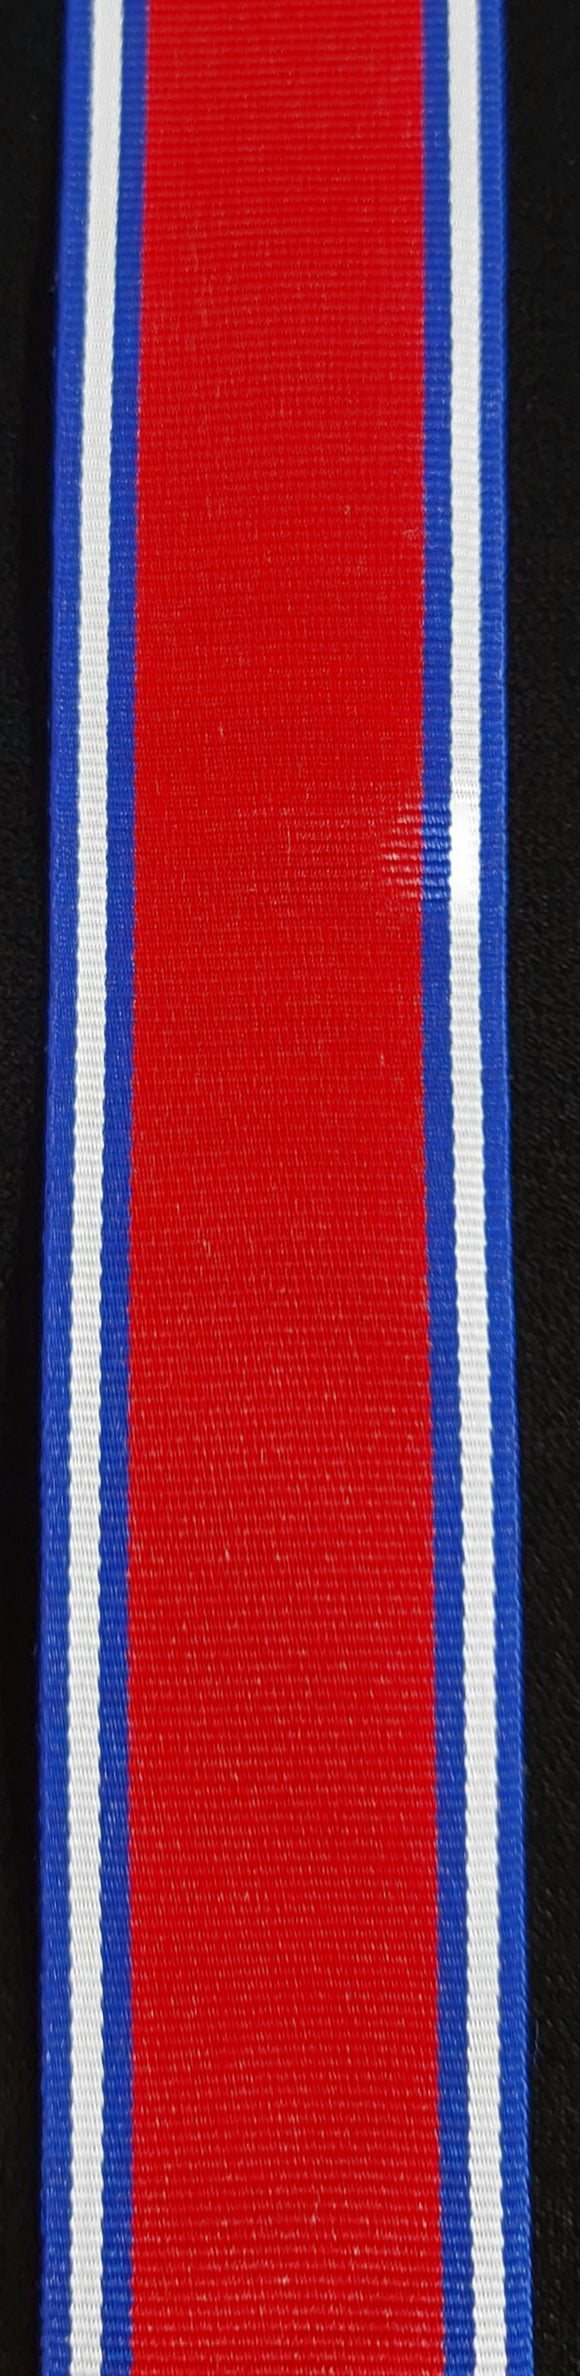 Ribbon, King George V Silver Jubilee Medal 1935